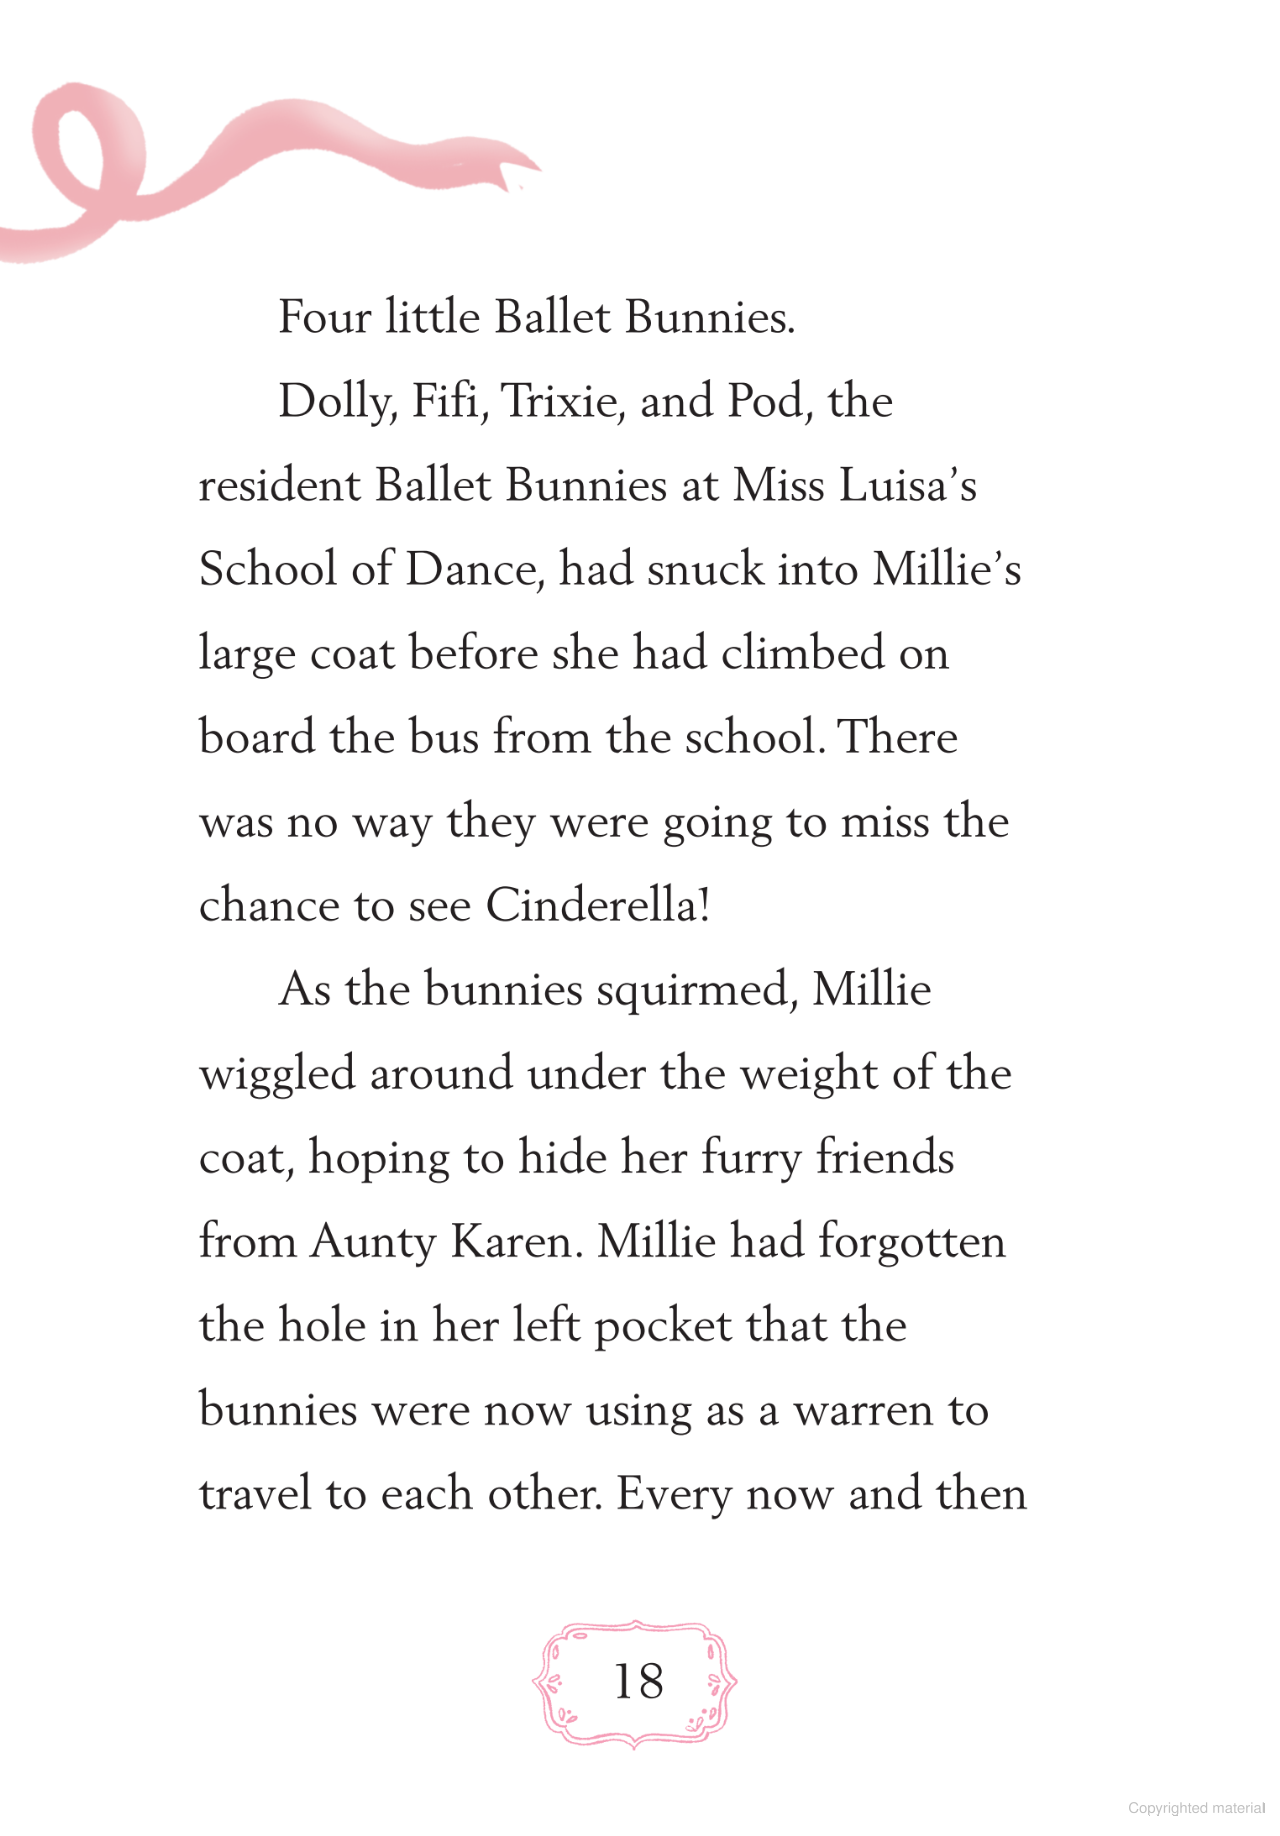 Ballet Bunnies #4: The Lost Slipper